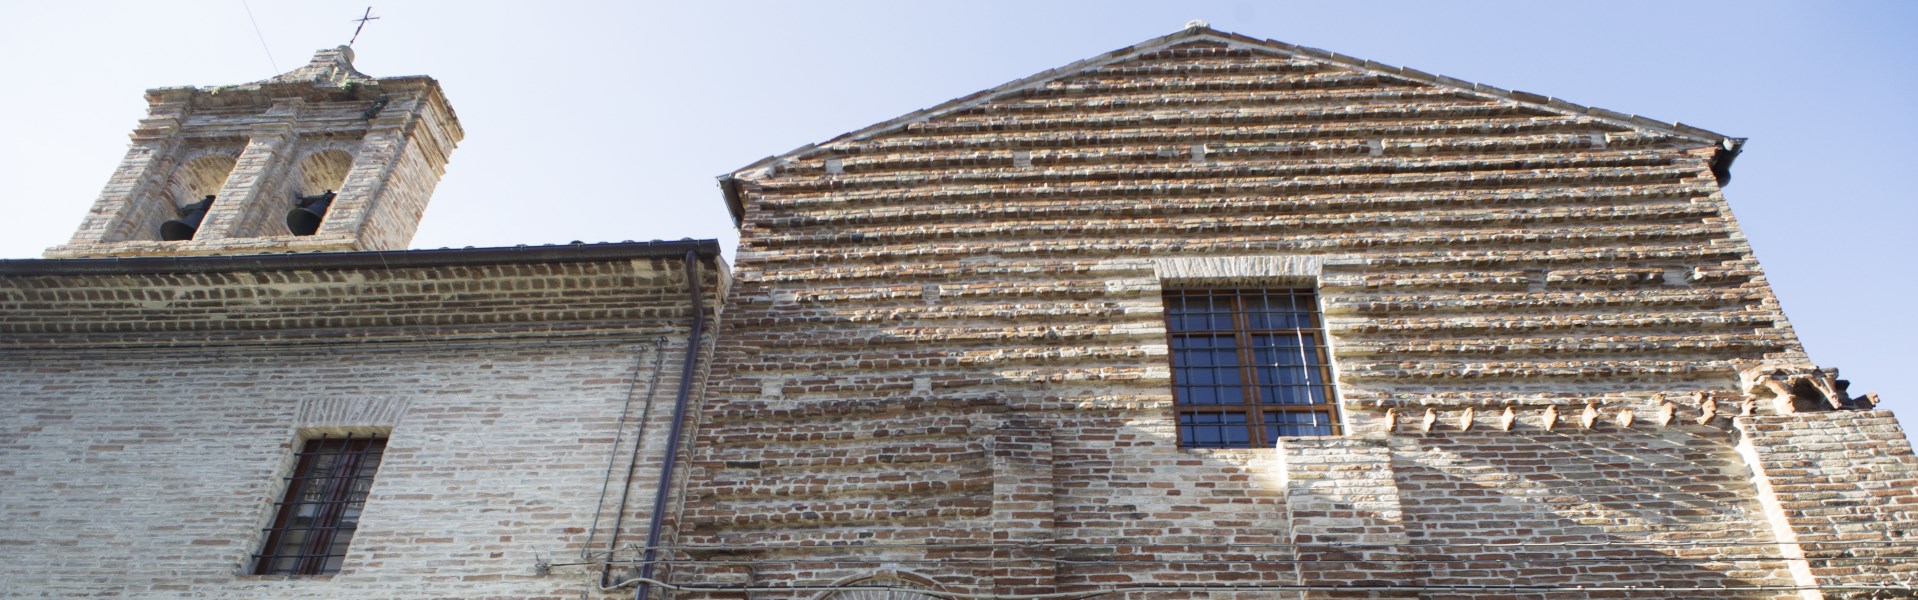 Santa Vittoria in Matenano - Monastero Santa Caterina